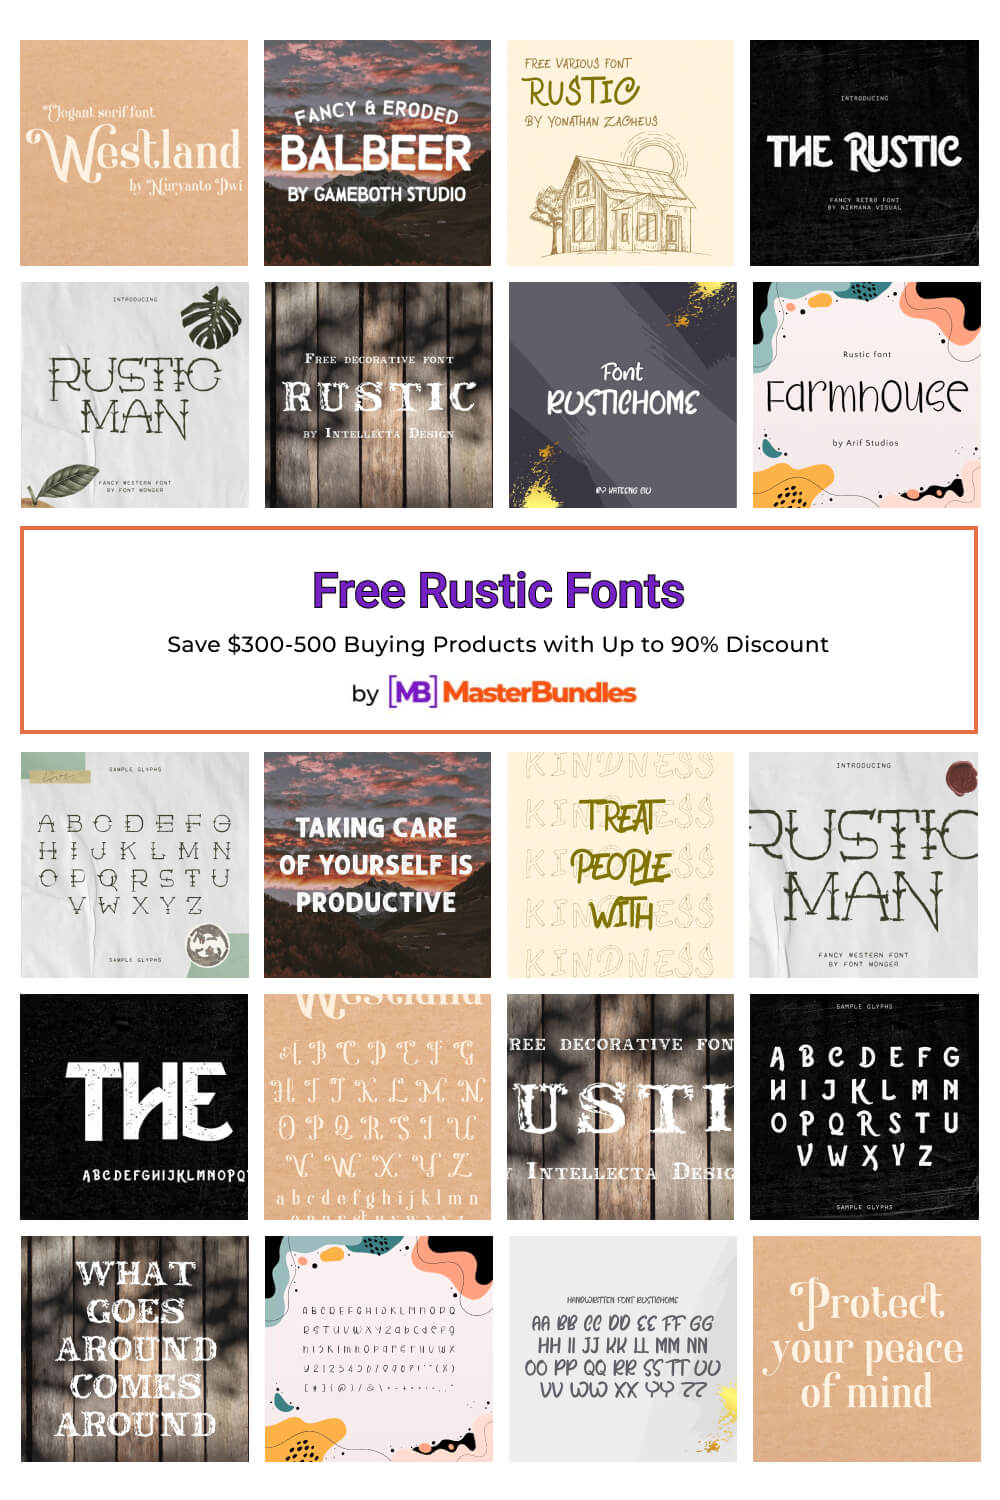 free rustic fonts pinterest image.